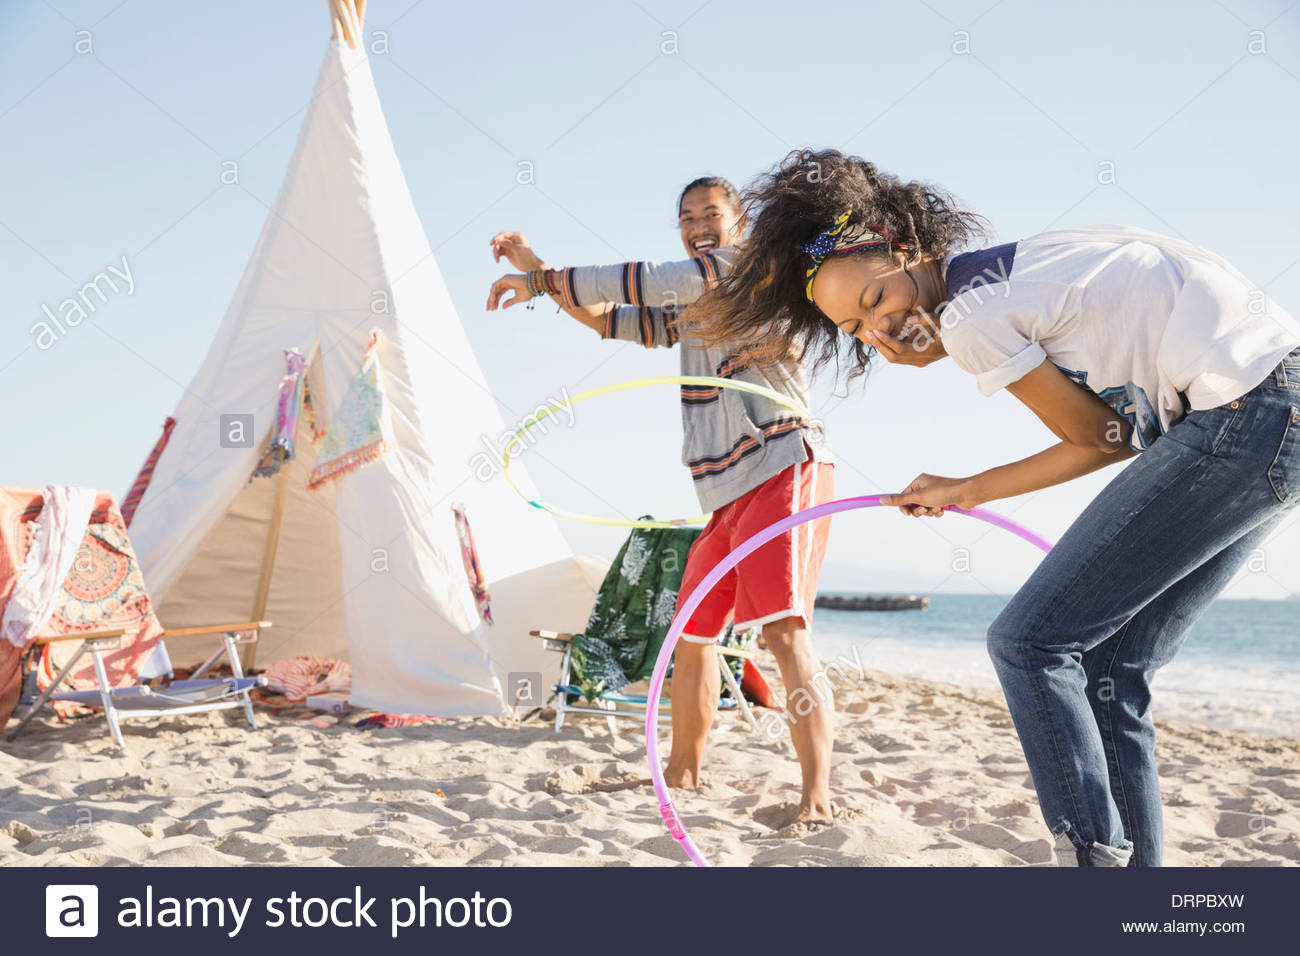 Couple hula hooping on beach Stock Photo